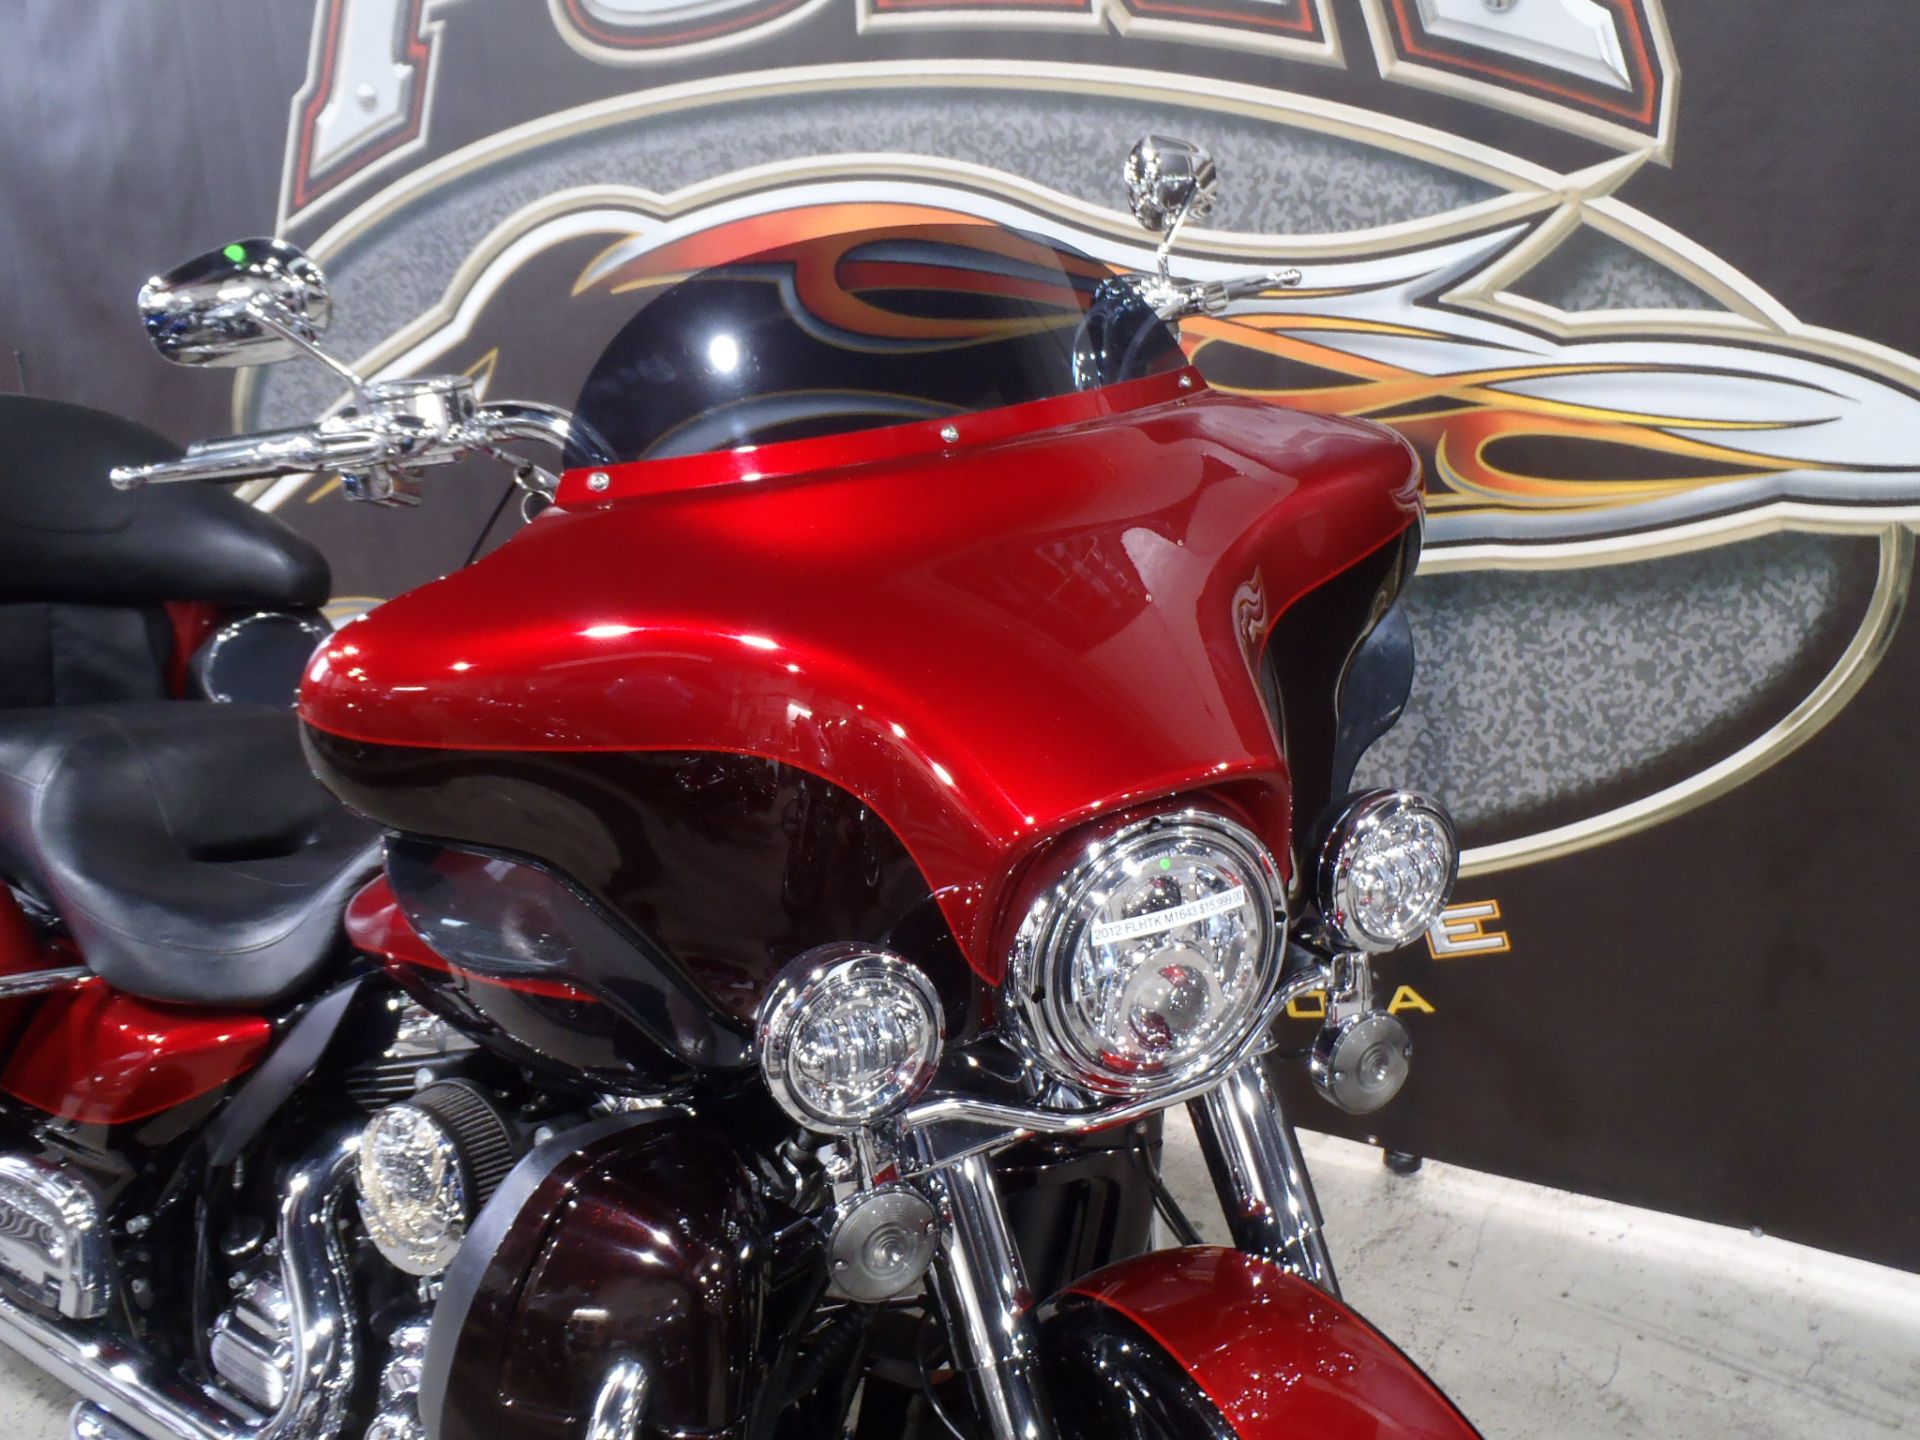 2012 Harley-Davidson Electra Glide® Ultra Limited in South Saint Paul, Minnesota - Photo 3